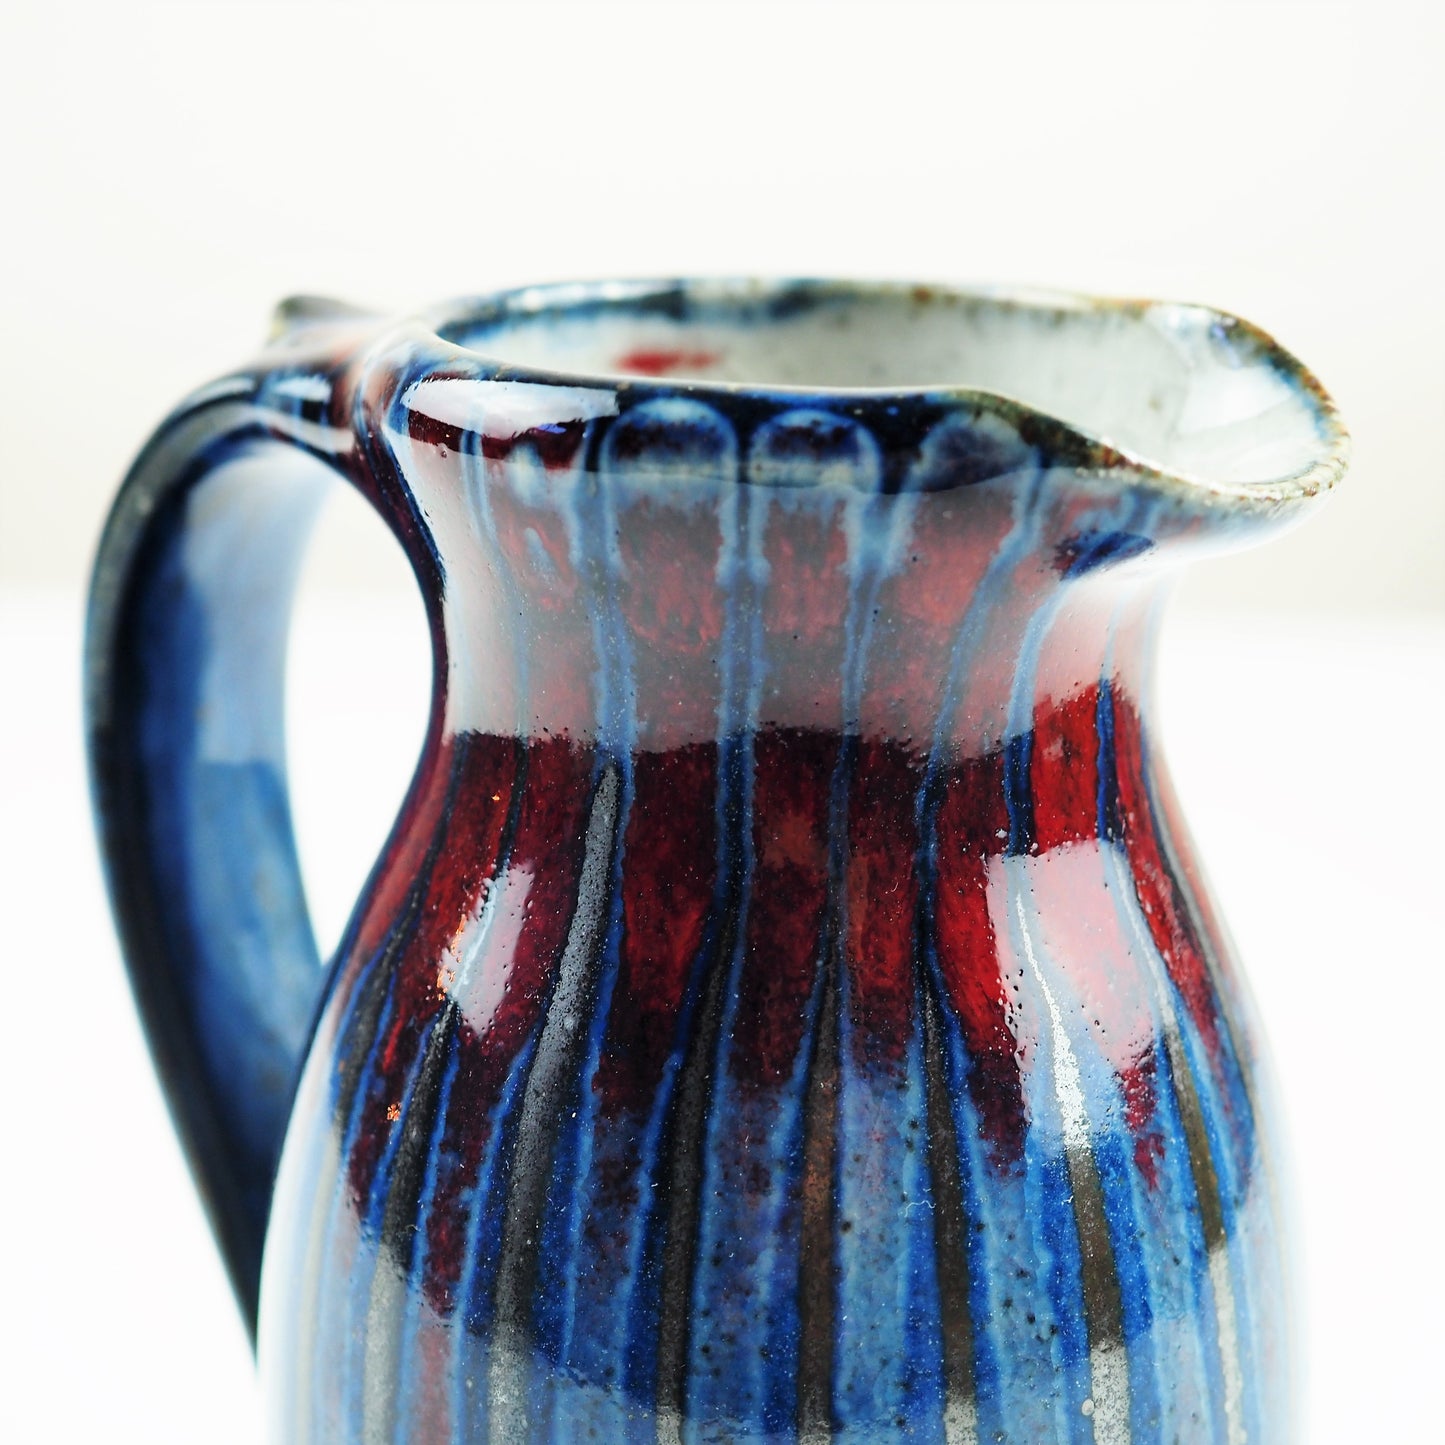 Goldsmith, Robert – Blue and Red Small Jug | Robert Goldsmith | Primavera Gallery